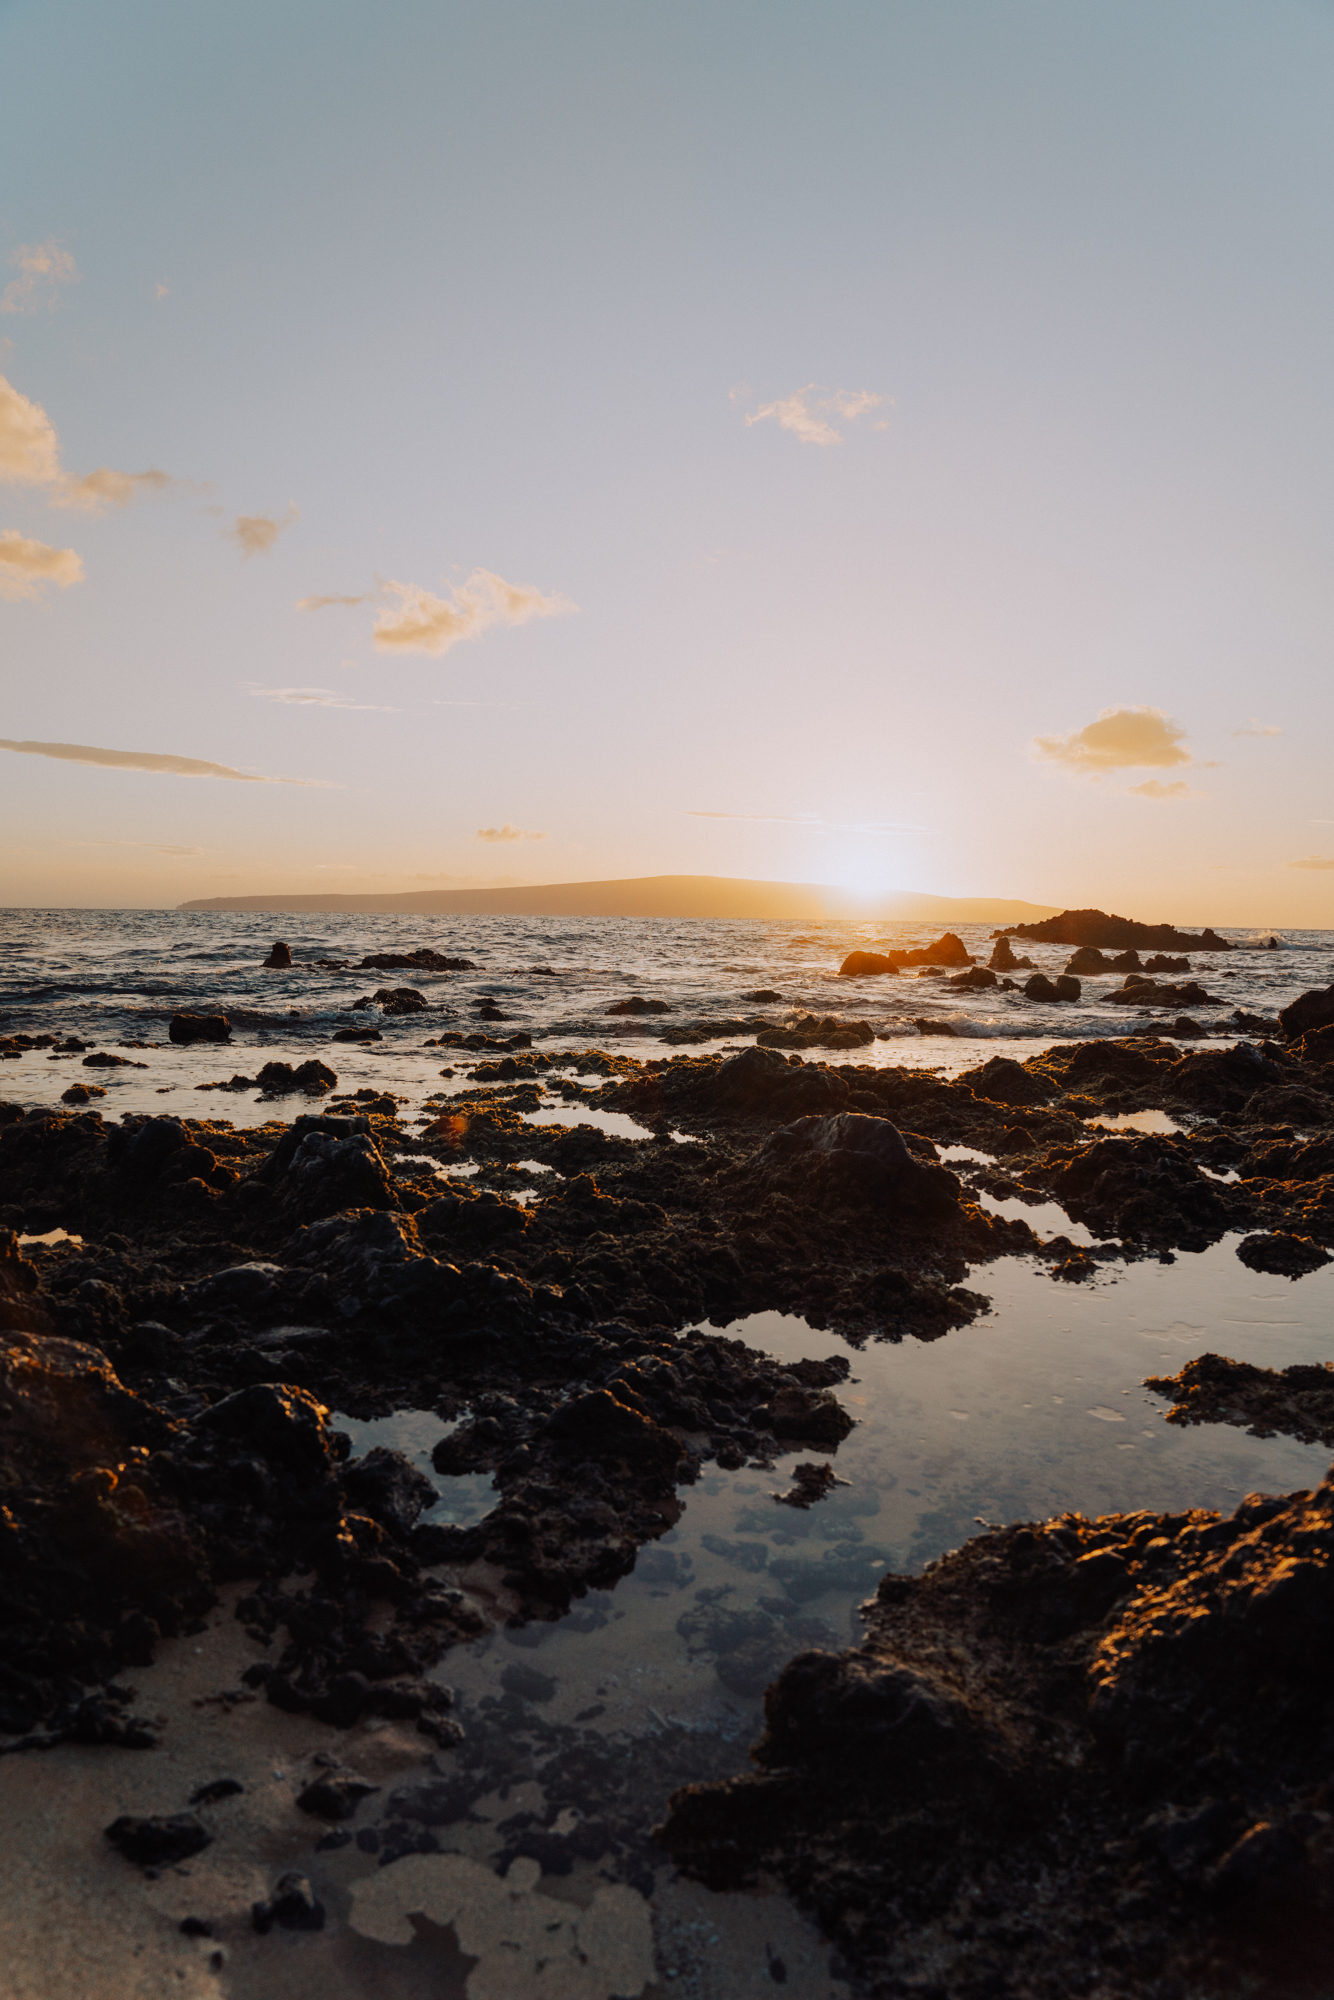 sunset over a rocky beach in Hawaii